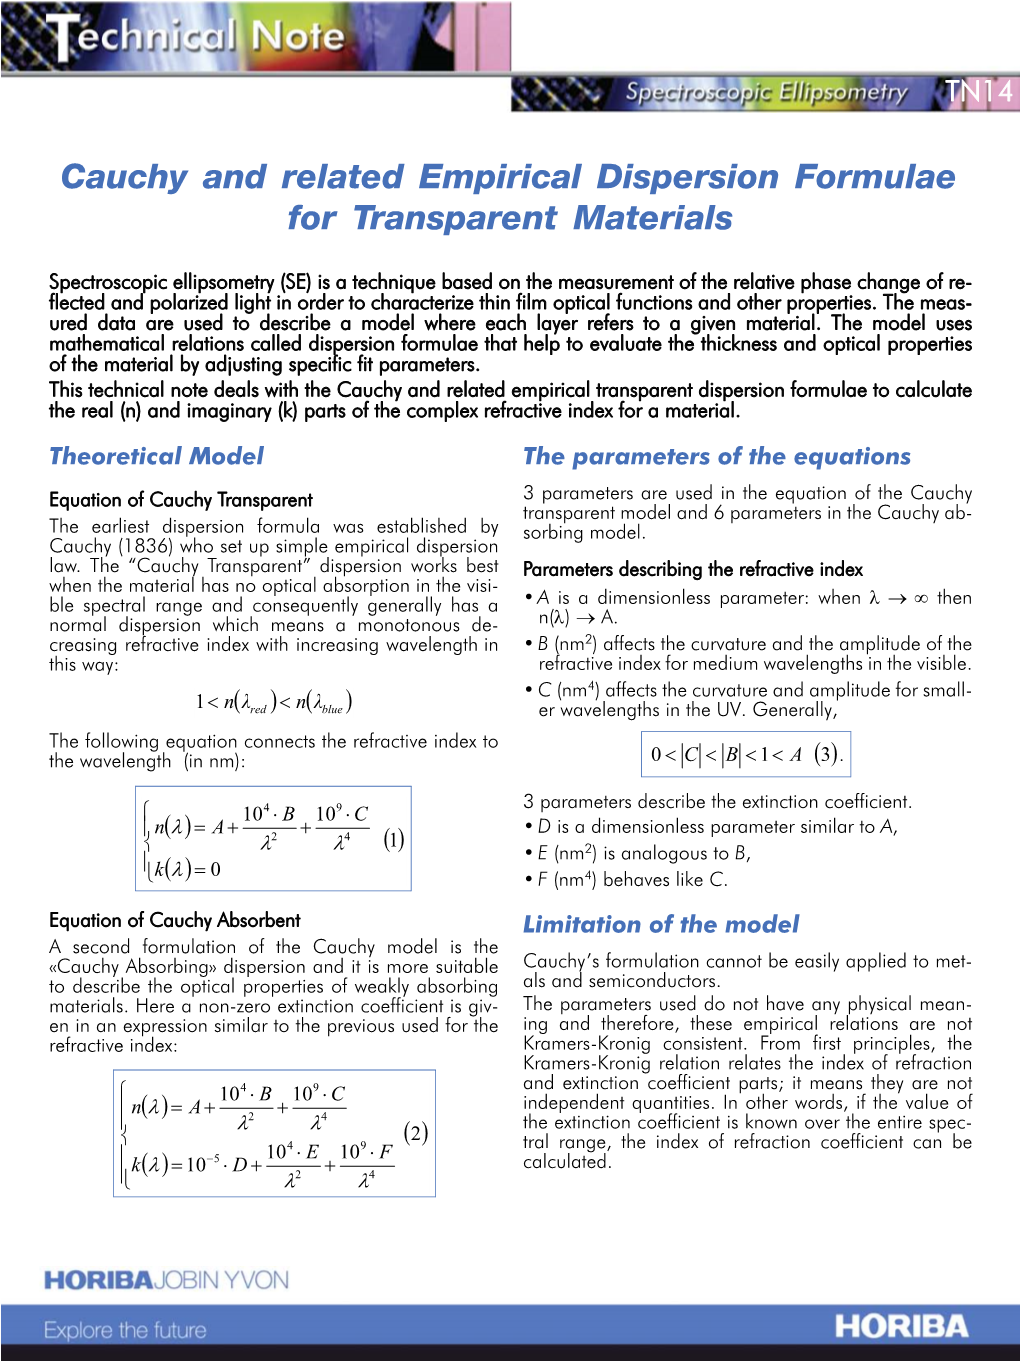 Cauchy and Related Empirical Dispersion Formulae for Transparent Materials